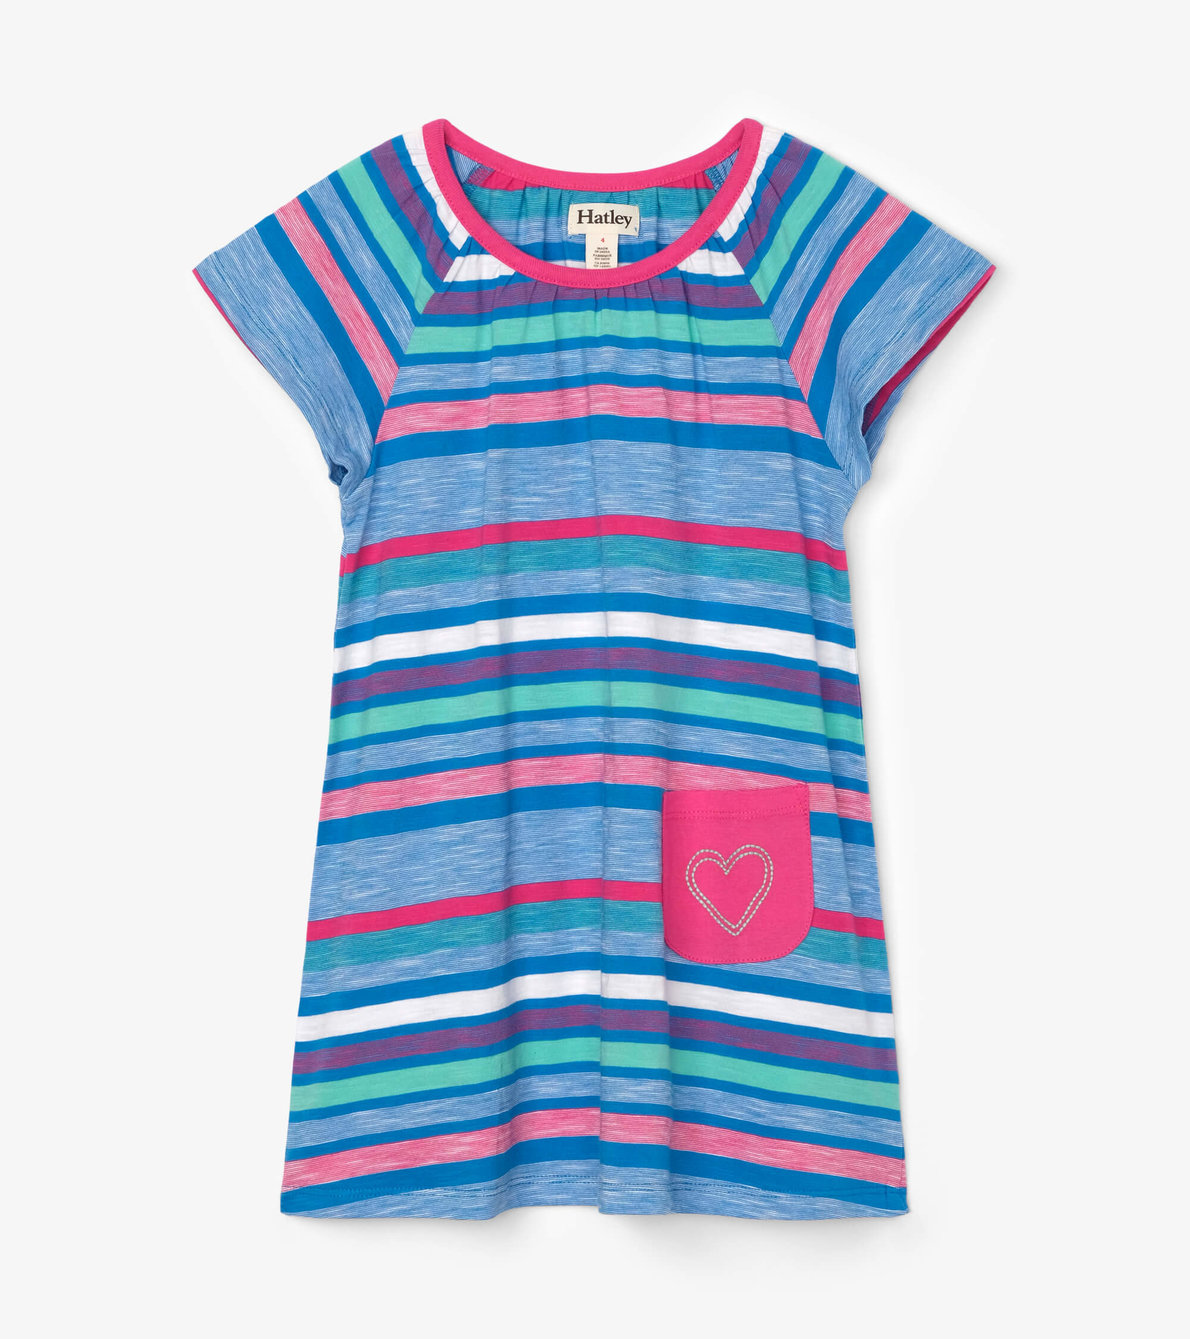 View larger image of Summer Stripe Tee Shirt Dress